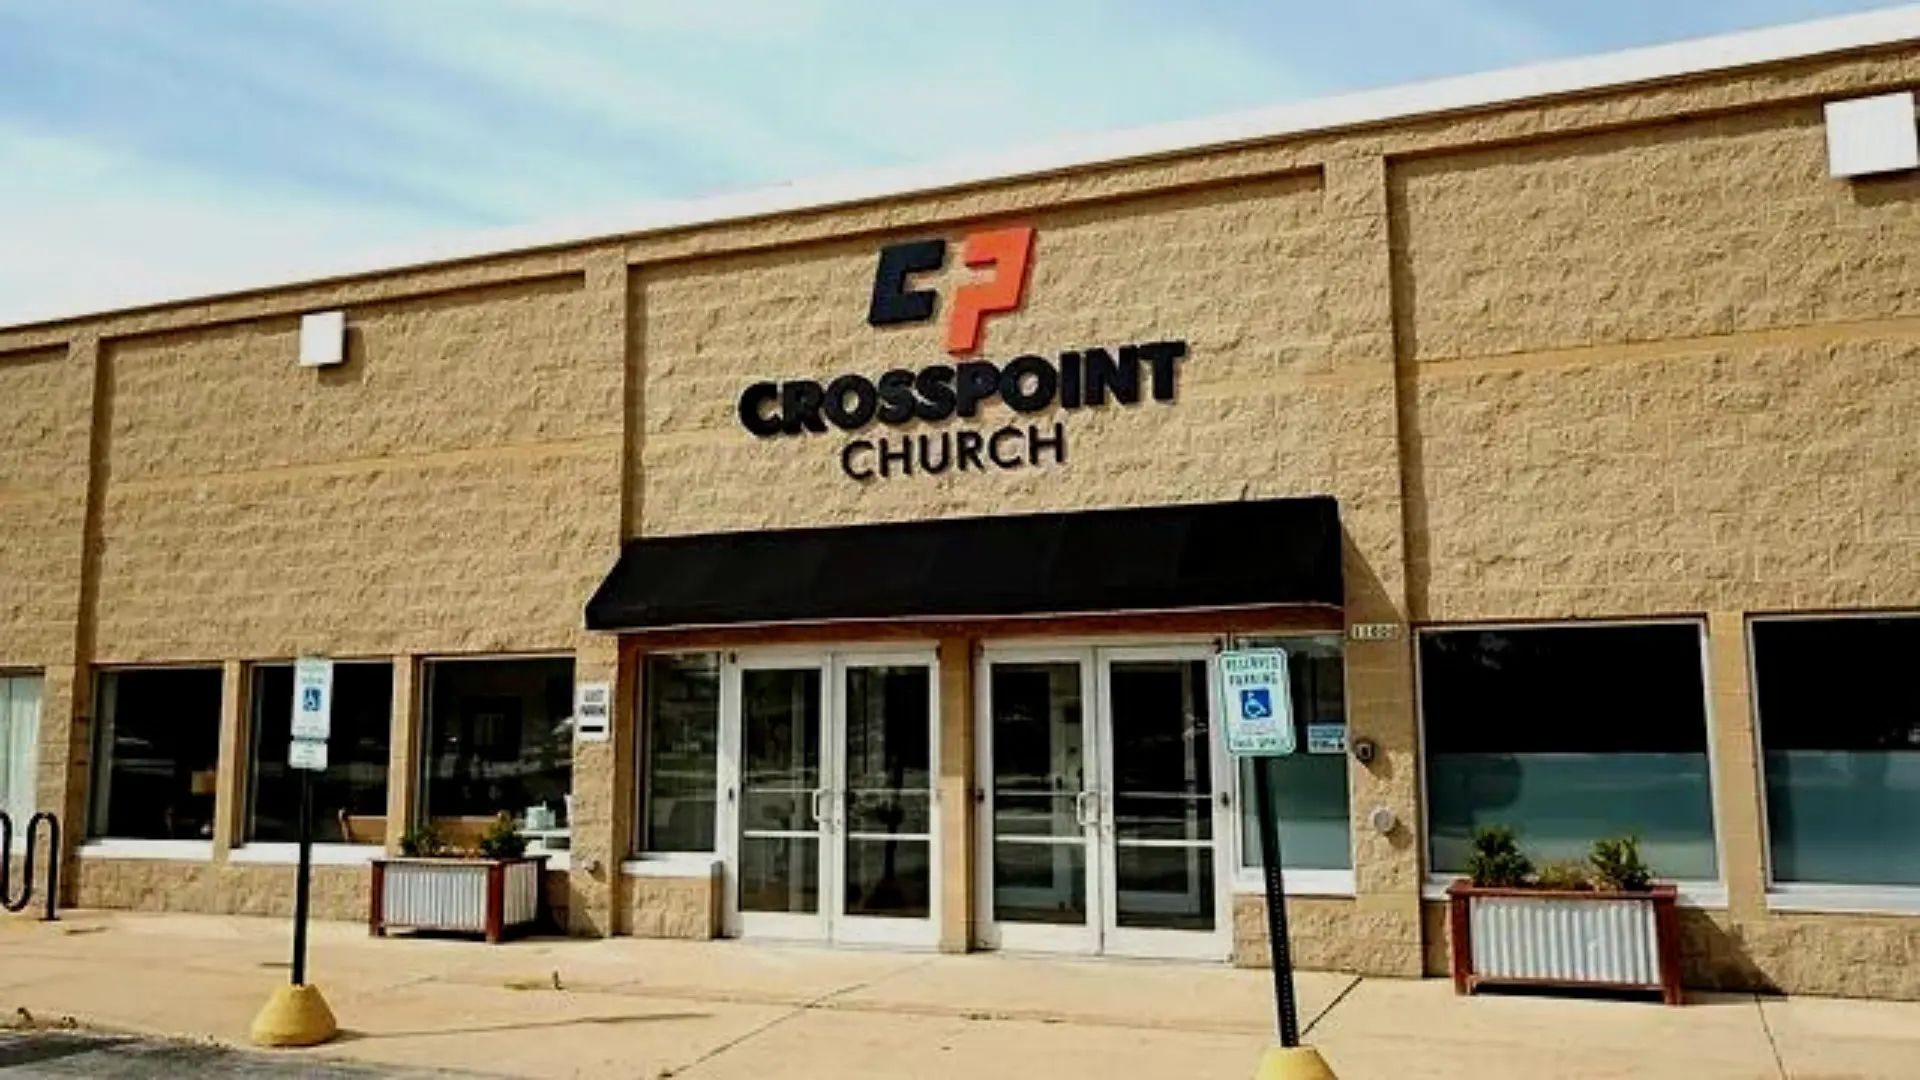 CrossPoint Church